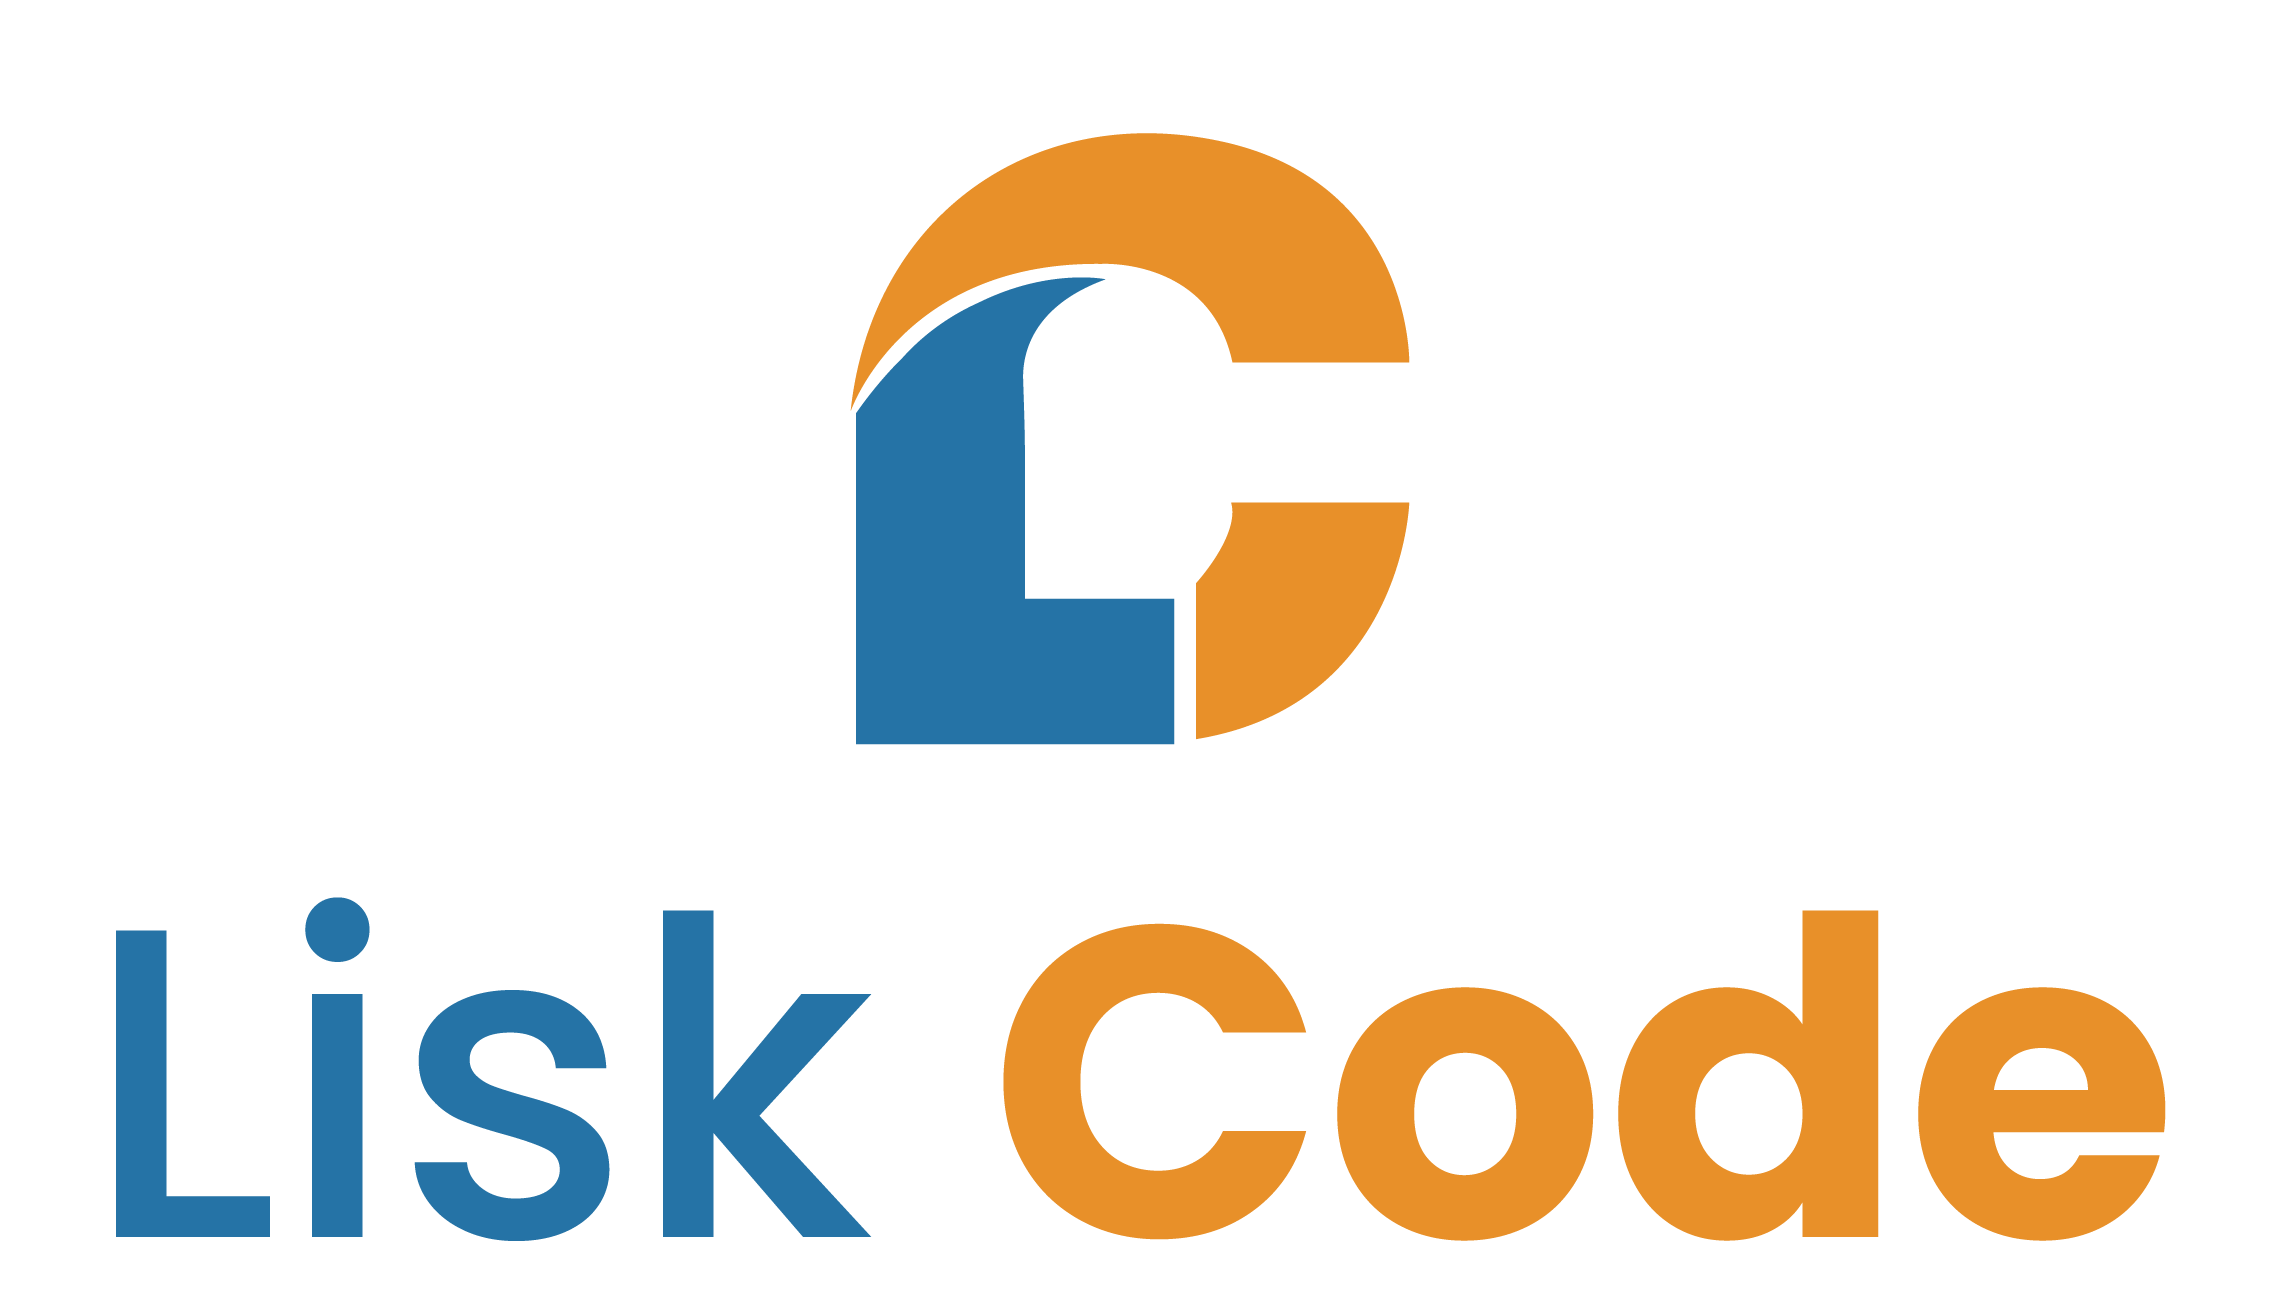 Lisk Code - 在 Lisk Code 上激活您的帐户